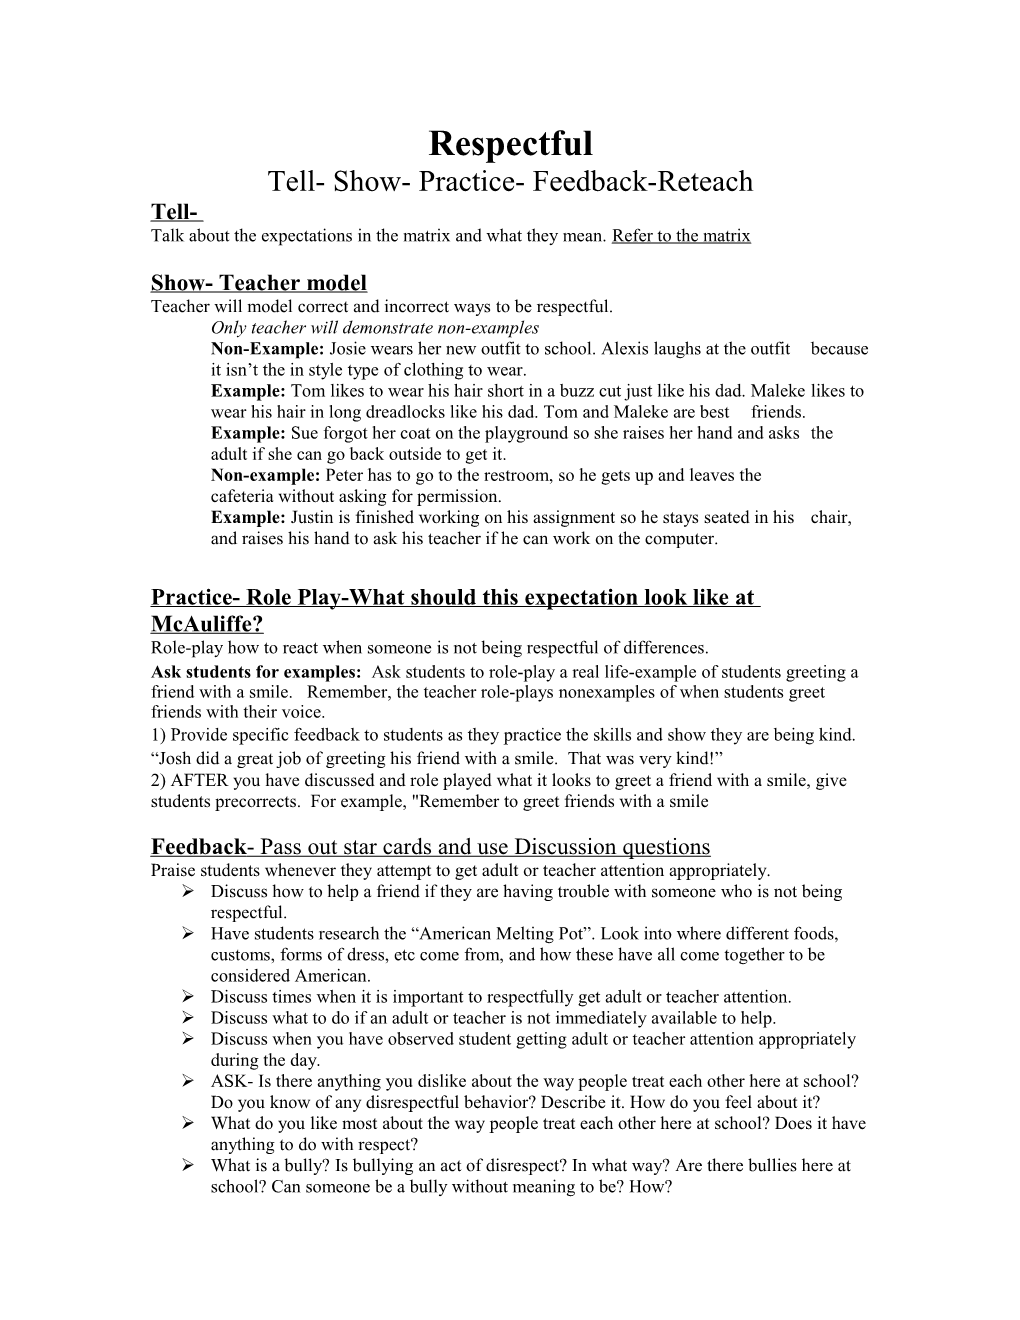 Tell- Show- Practice- Feedback-Reteach